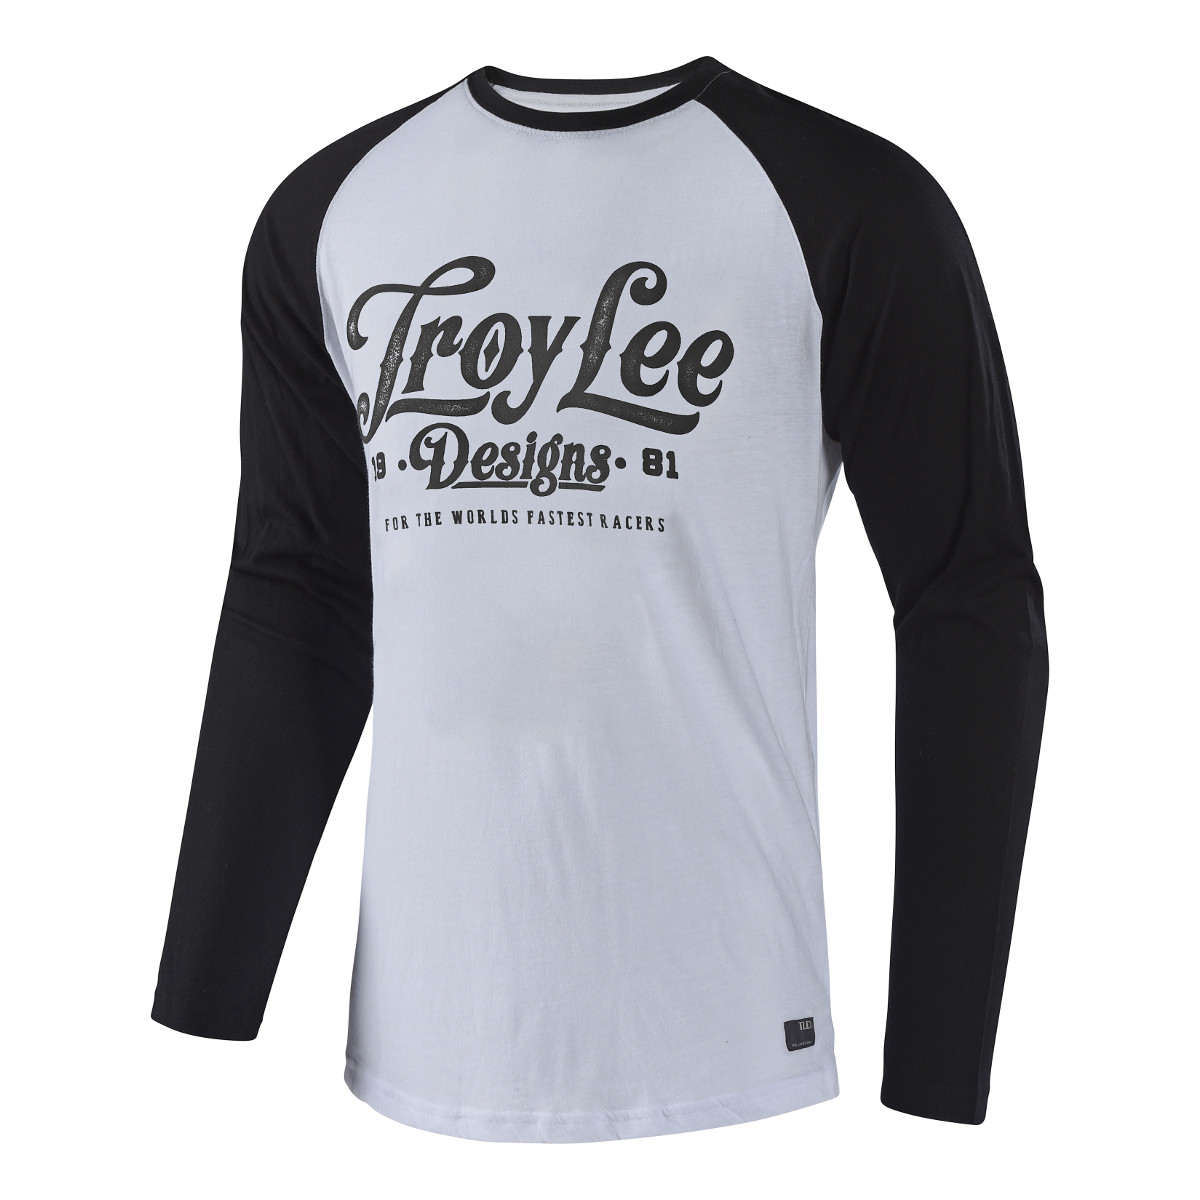 Troy Lee Designs Longsleeve Shirt Spiked White/Black